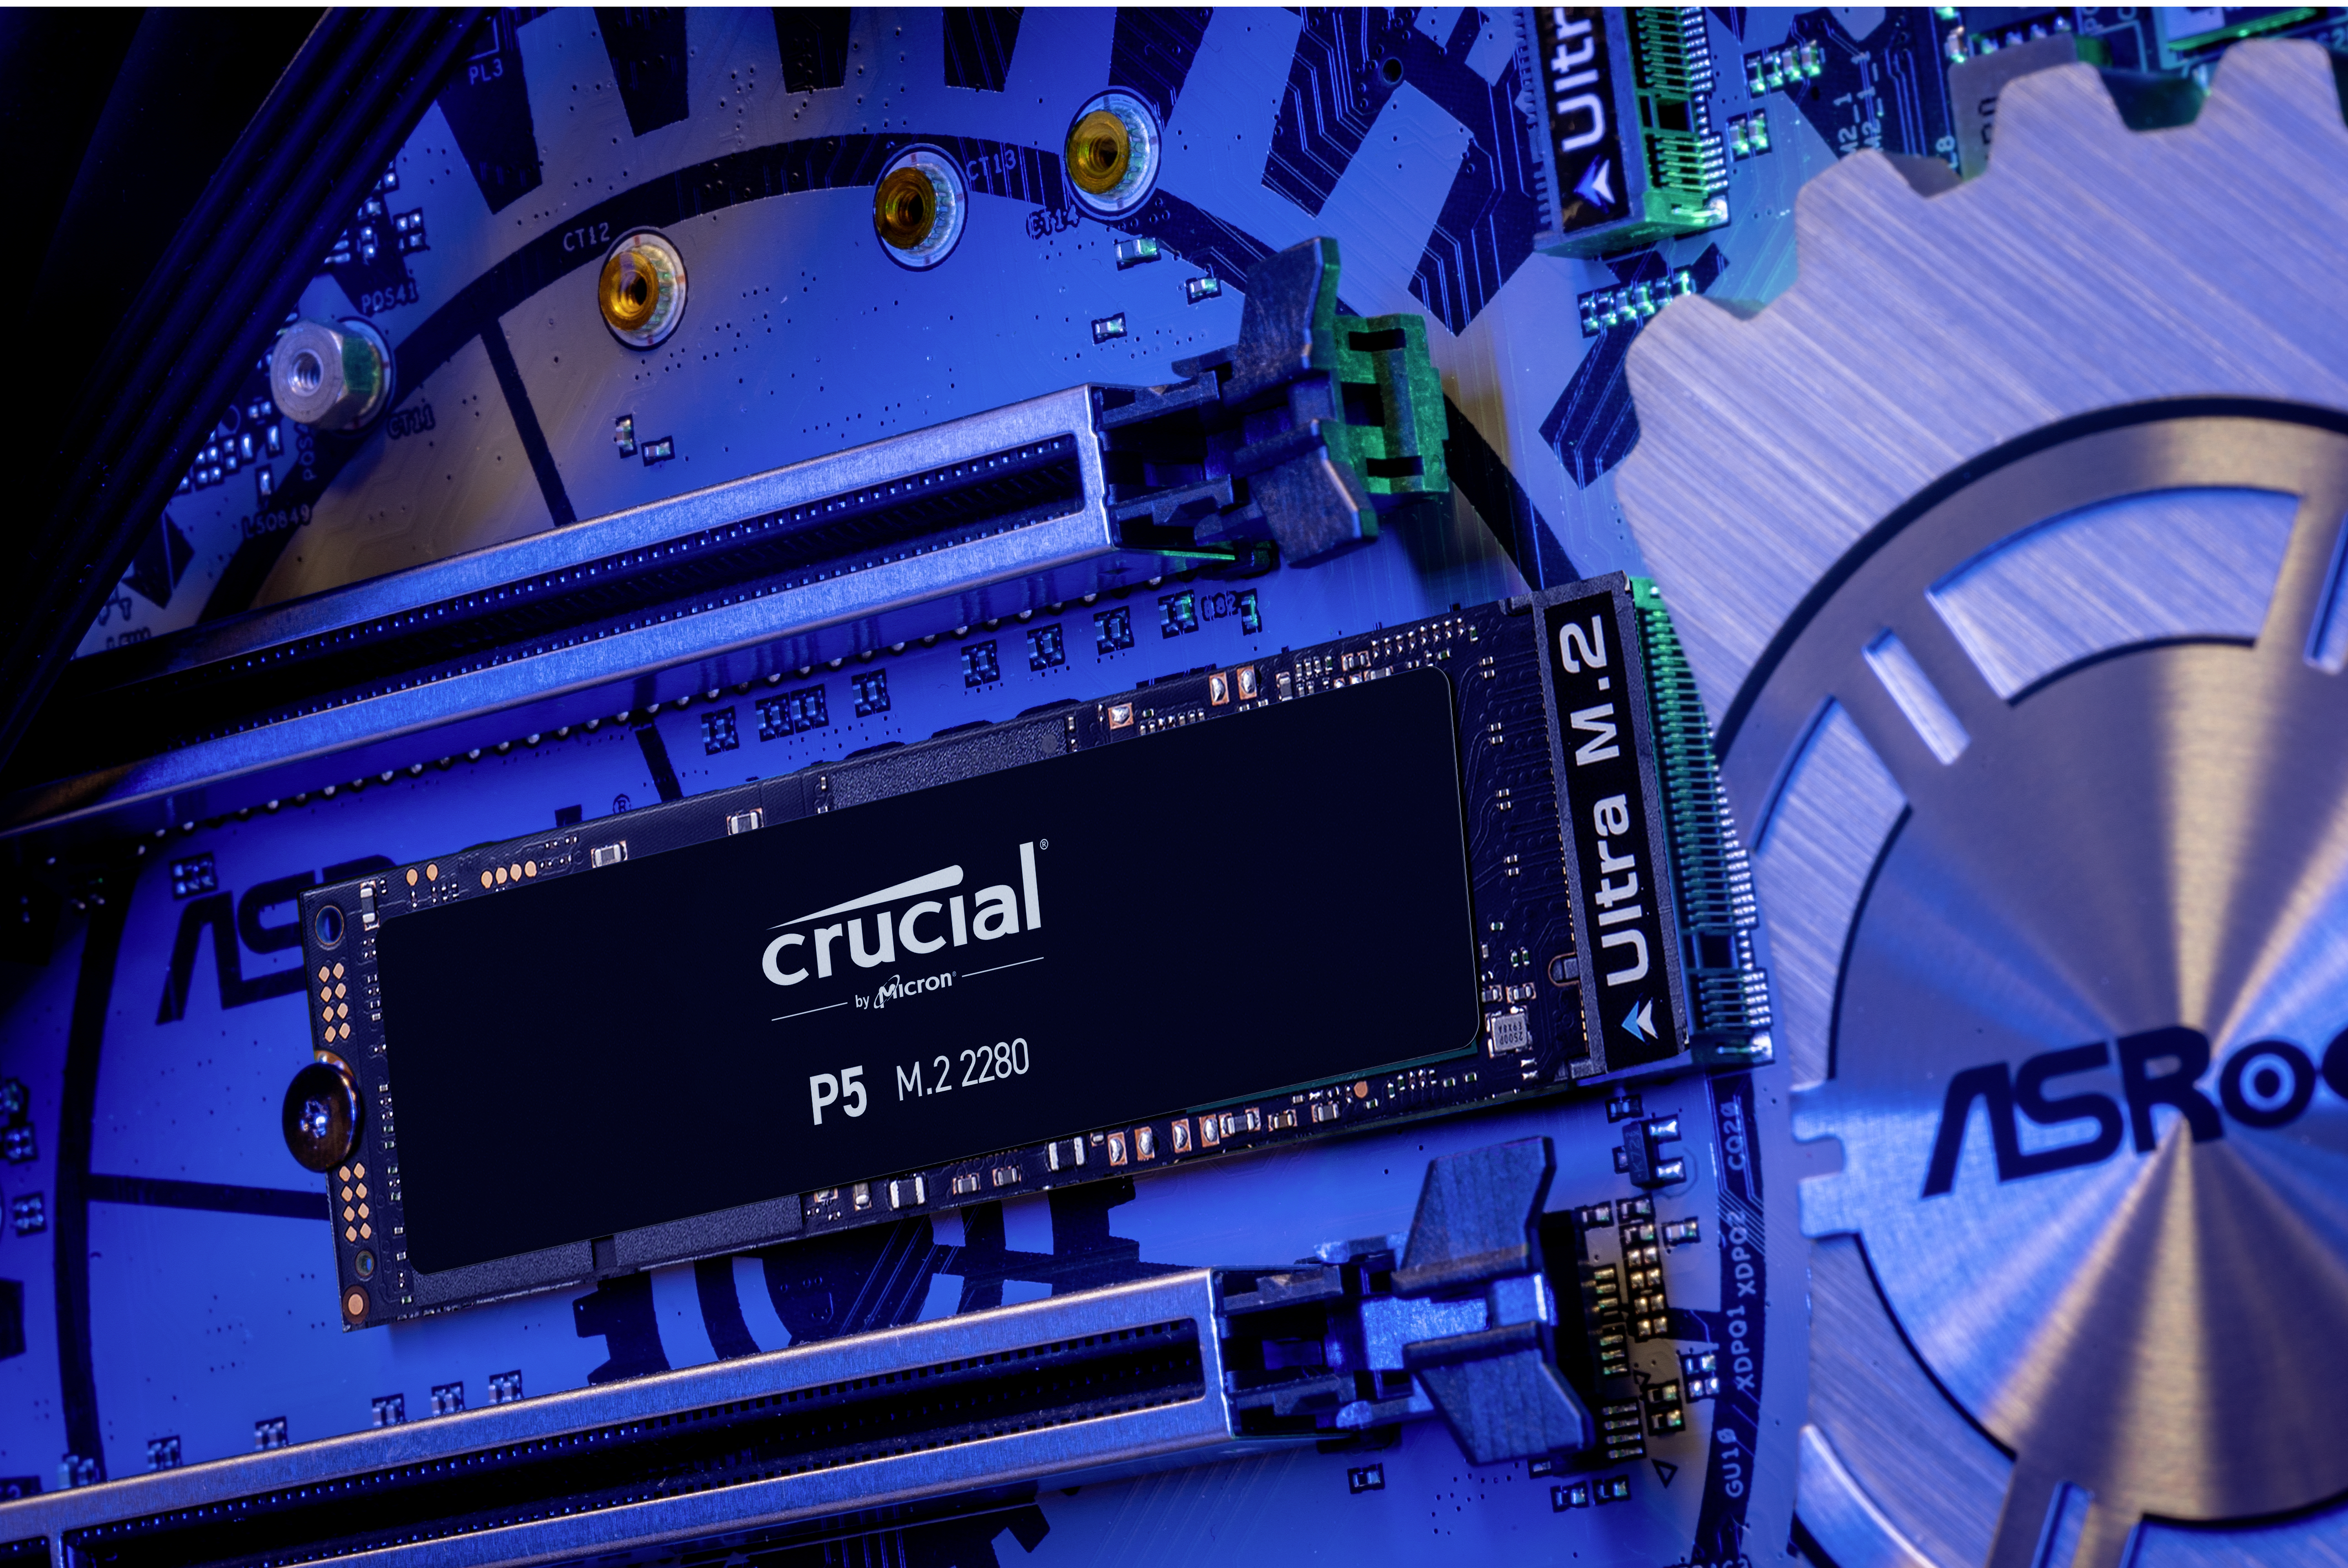 CRUCIAL P5 Festplatte, 1 TB via PCIe, SSD intern M.2